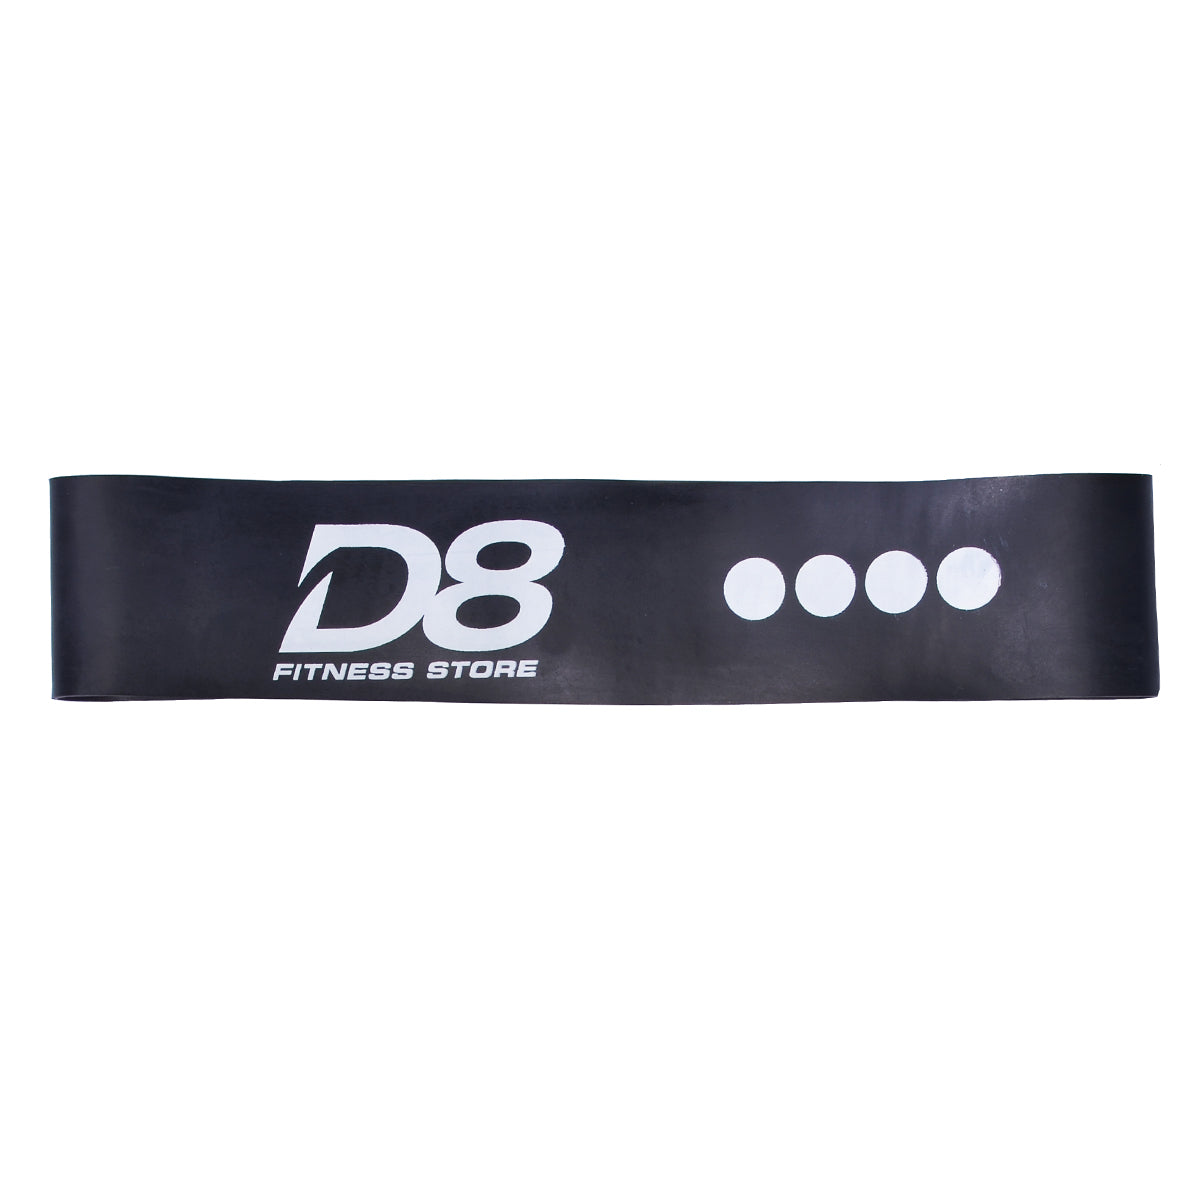 D8 Fitness - Mini Loop Bands (PACK OF 4)